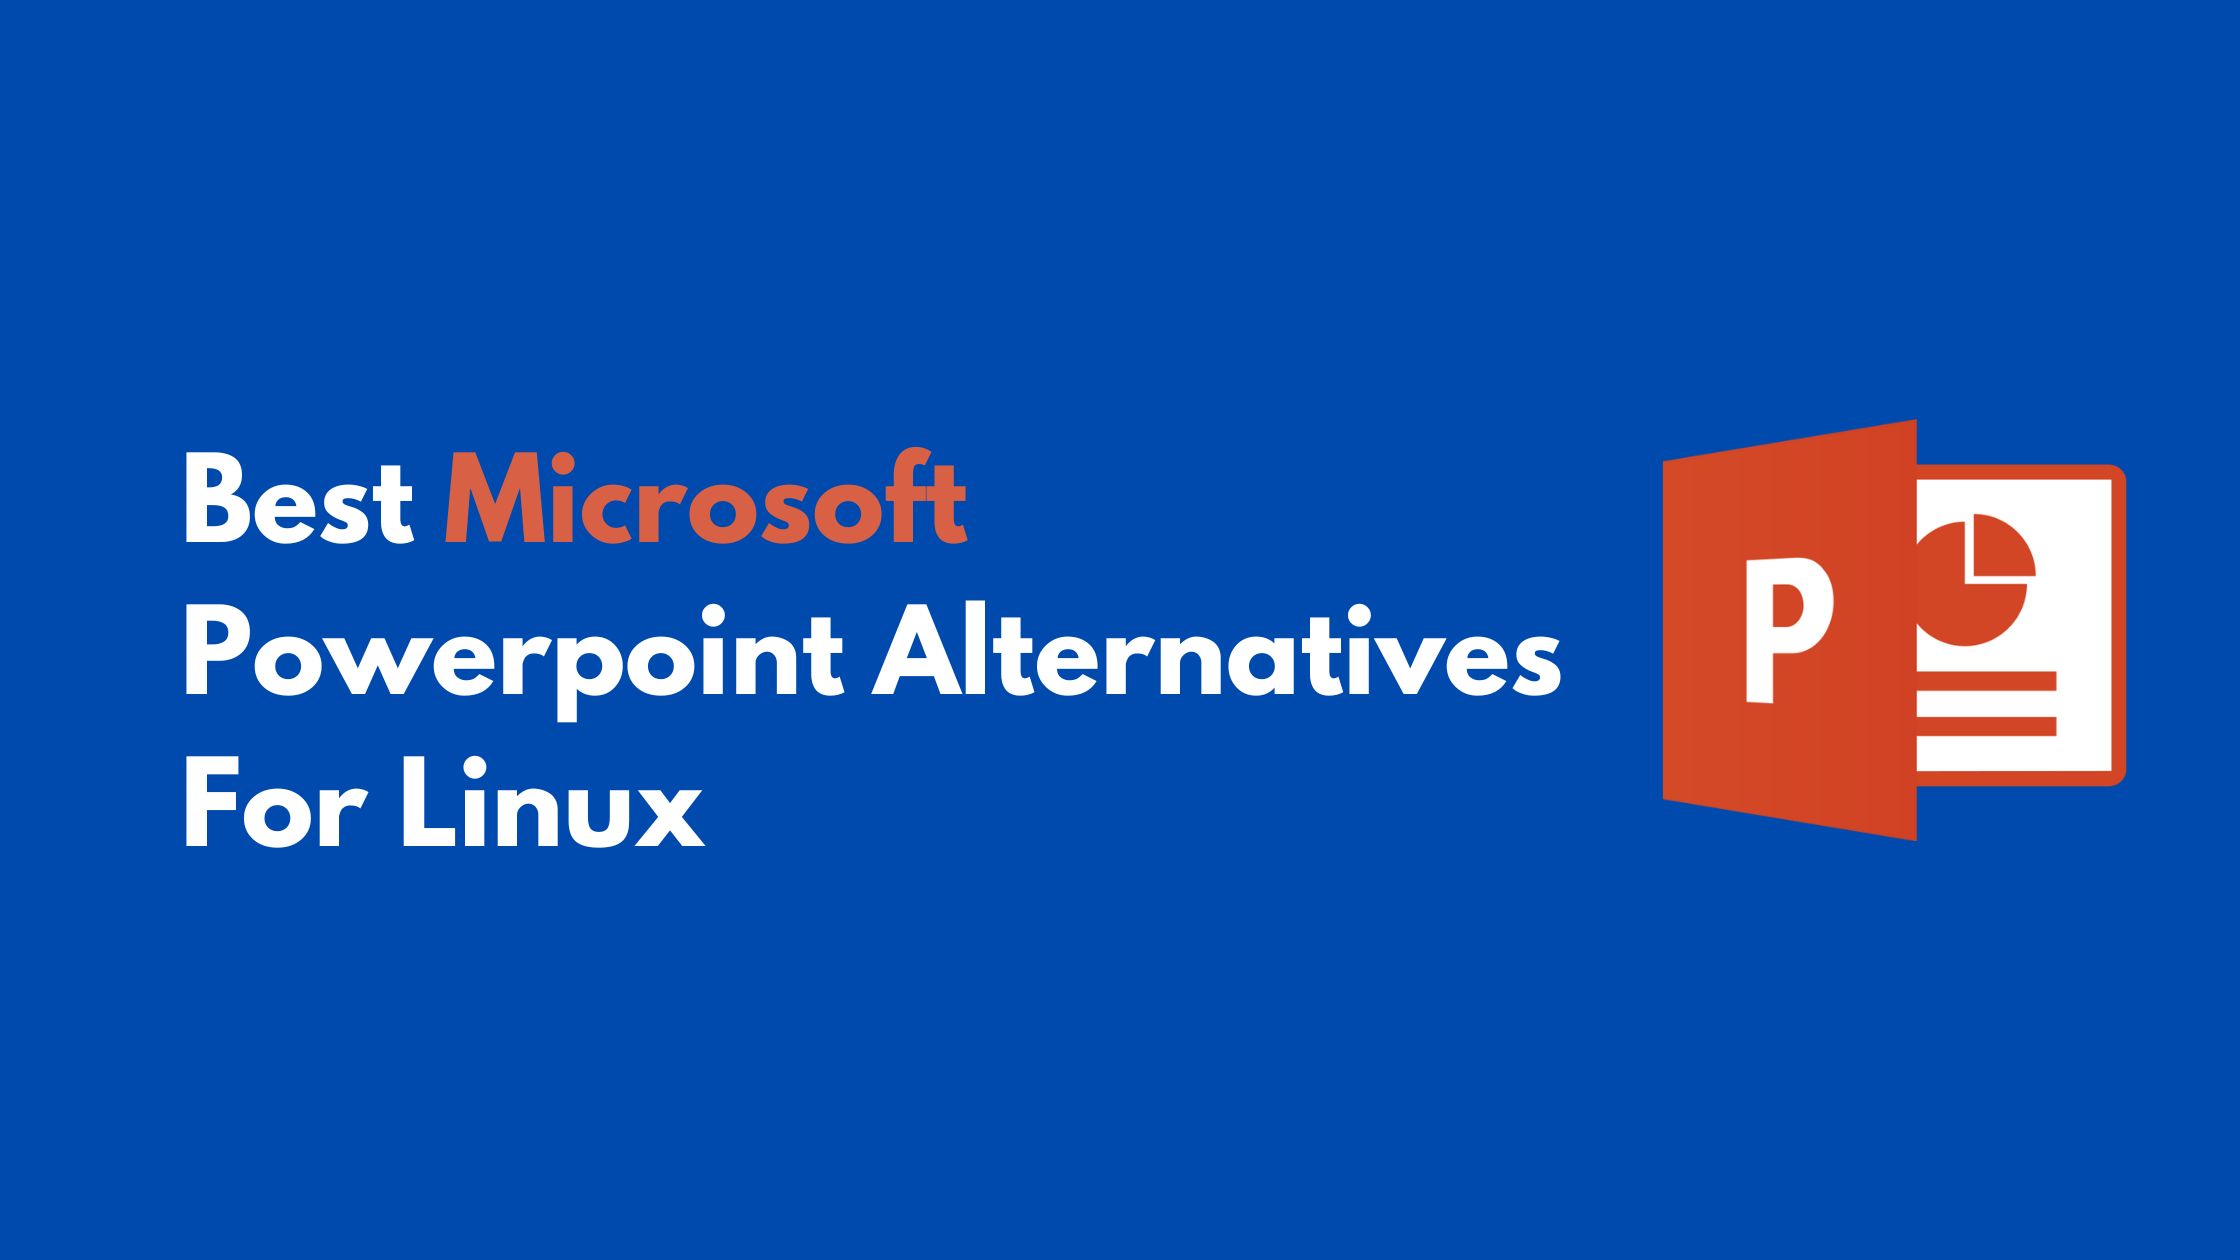 Best Microsoft Powerpoint Alternatives For Linux